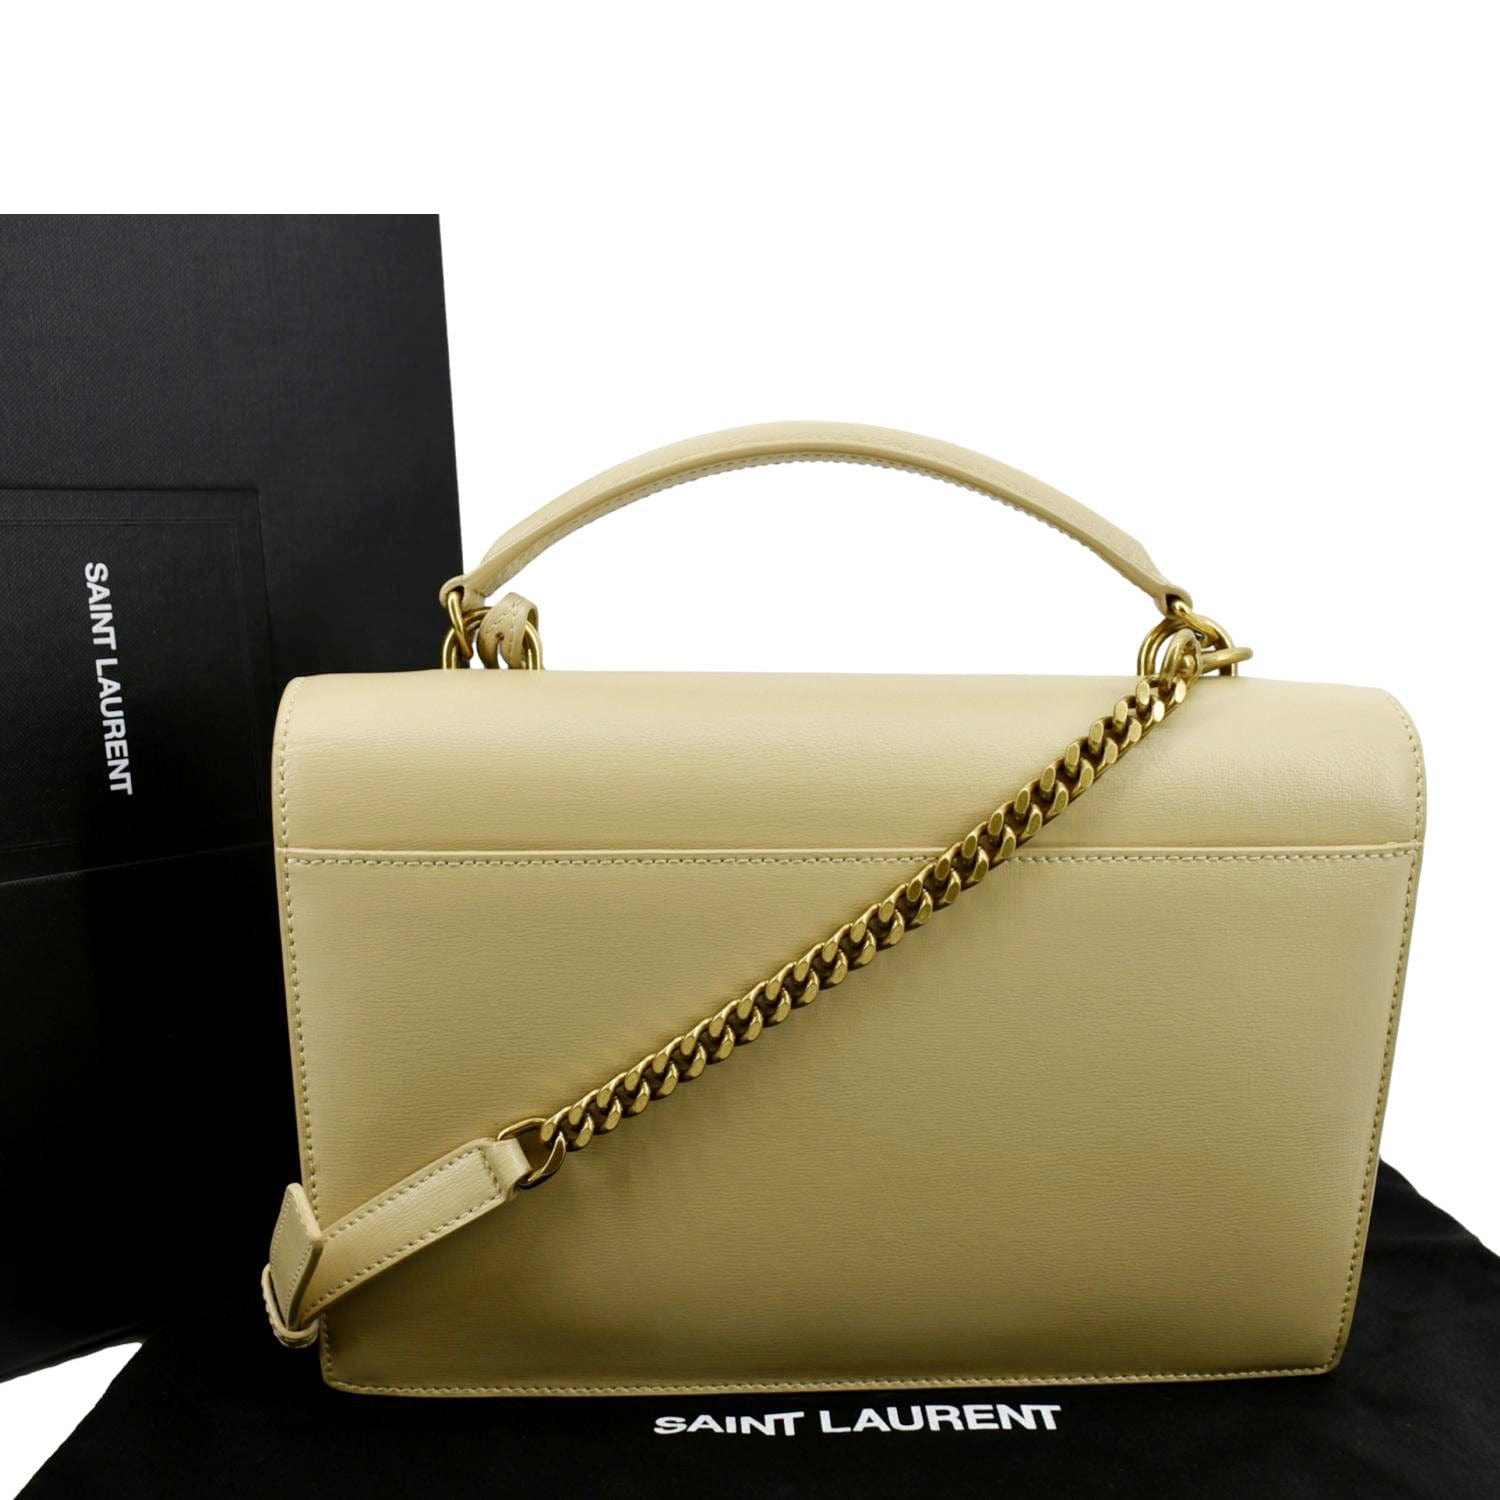 Authentic Yves Saint Laurent (YSL) Sunset Bag, Women's Fashion